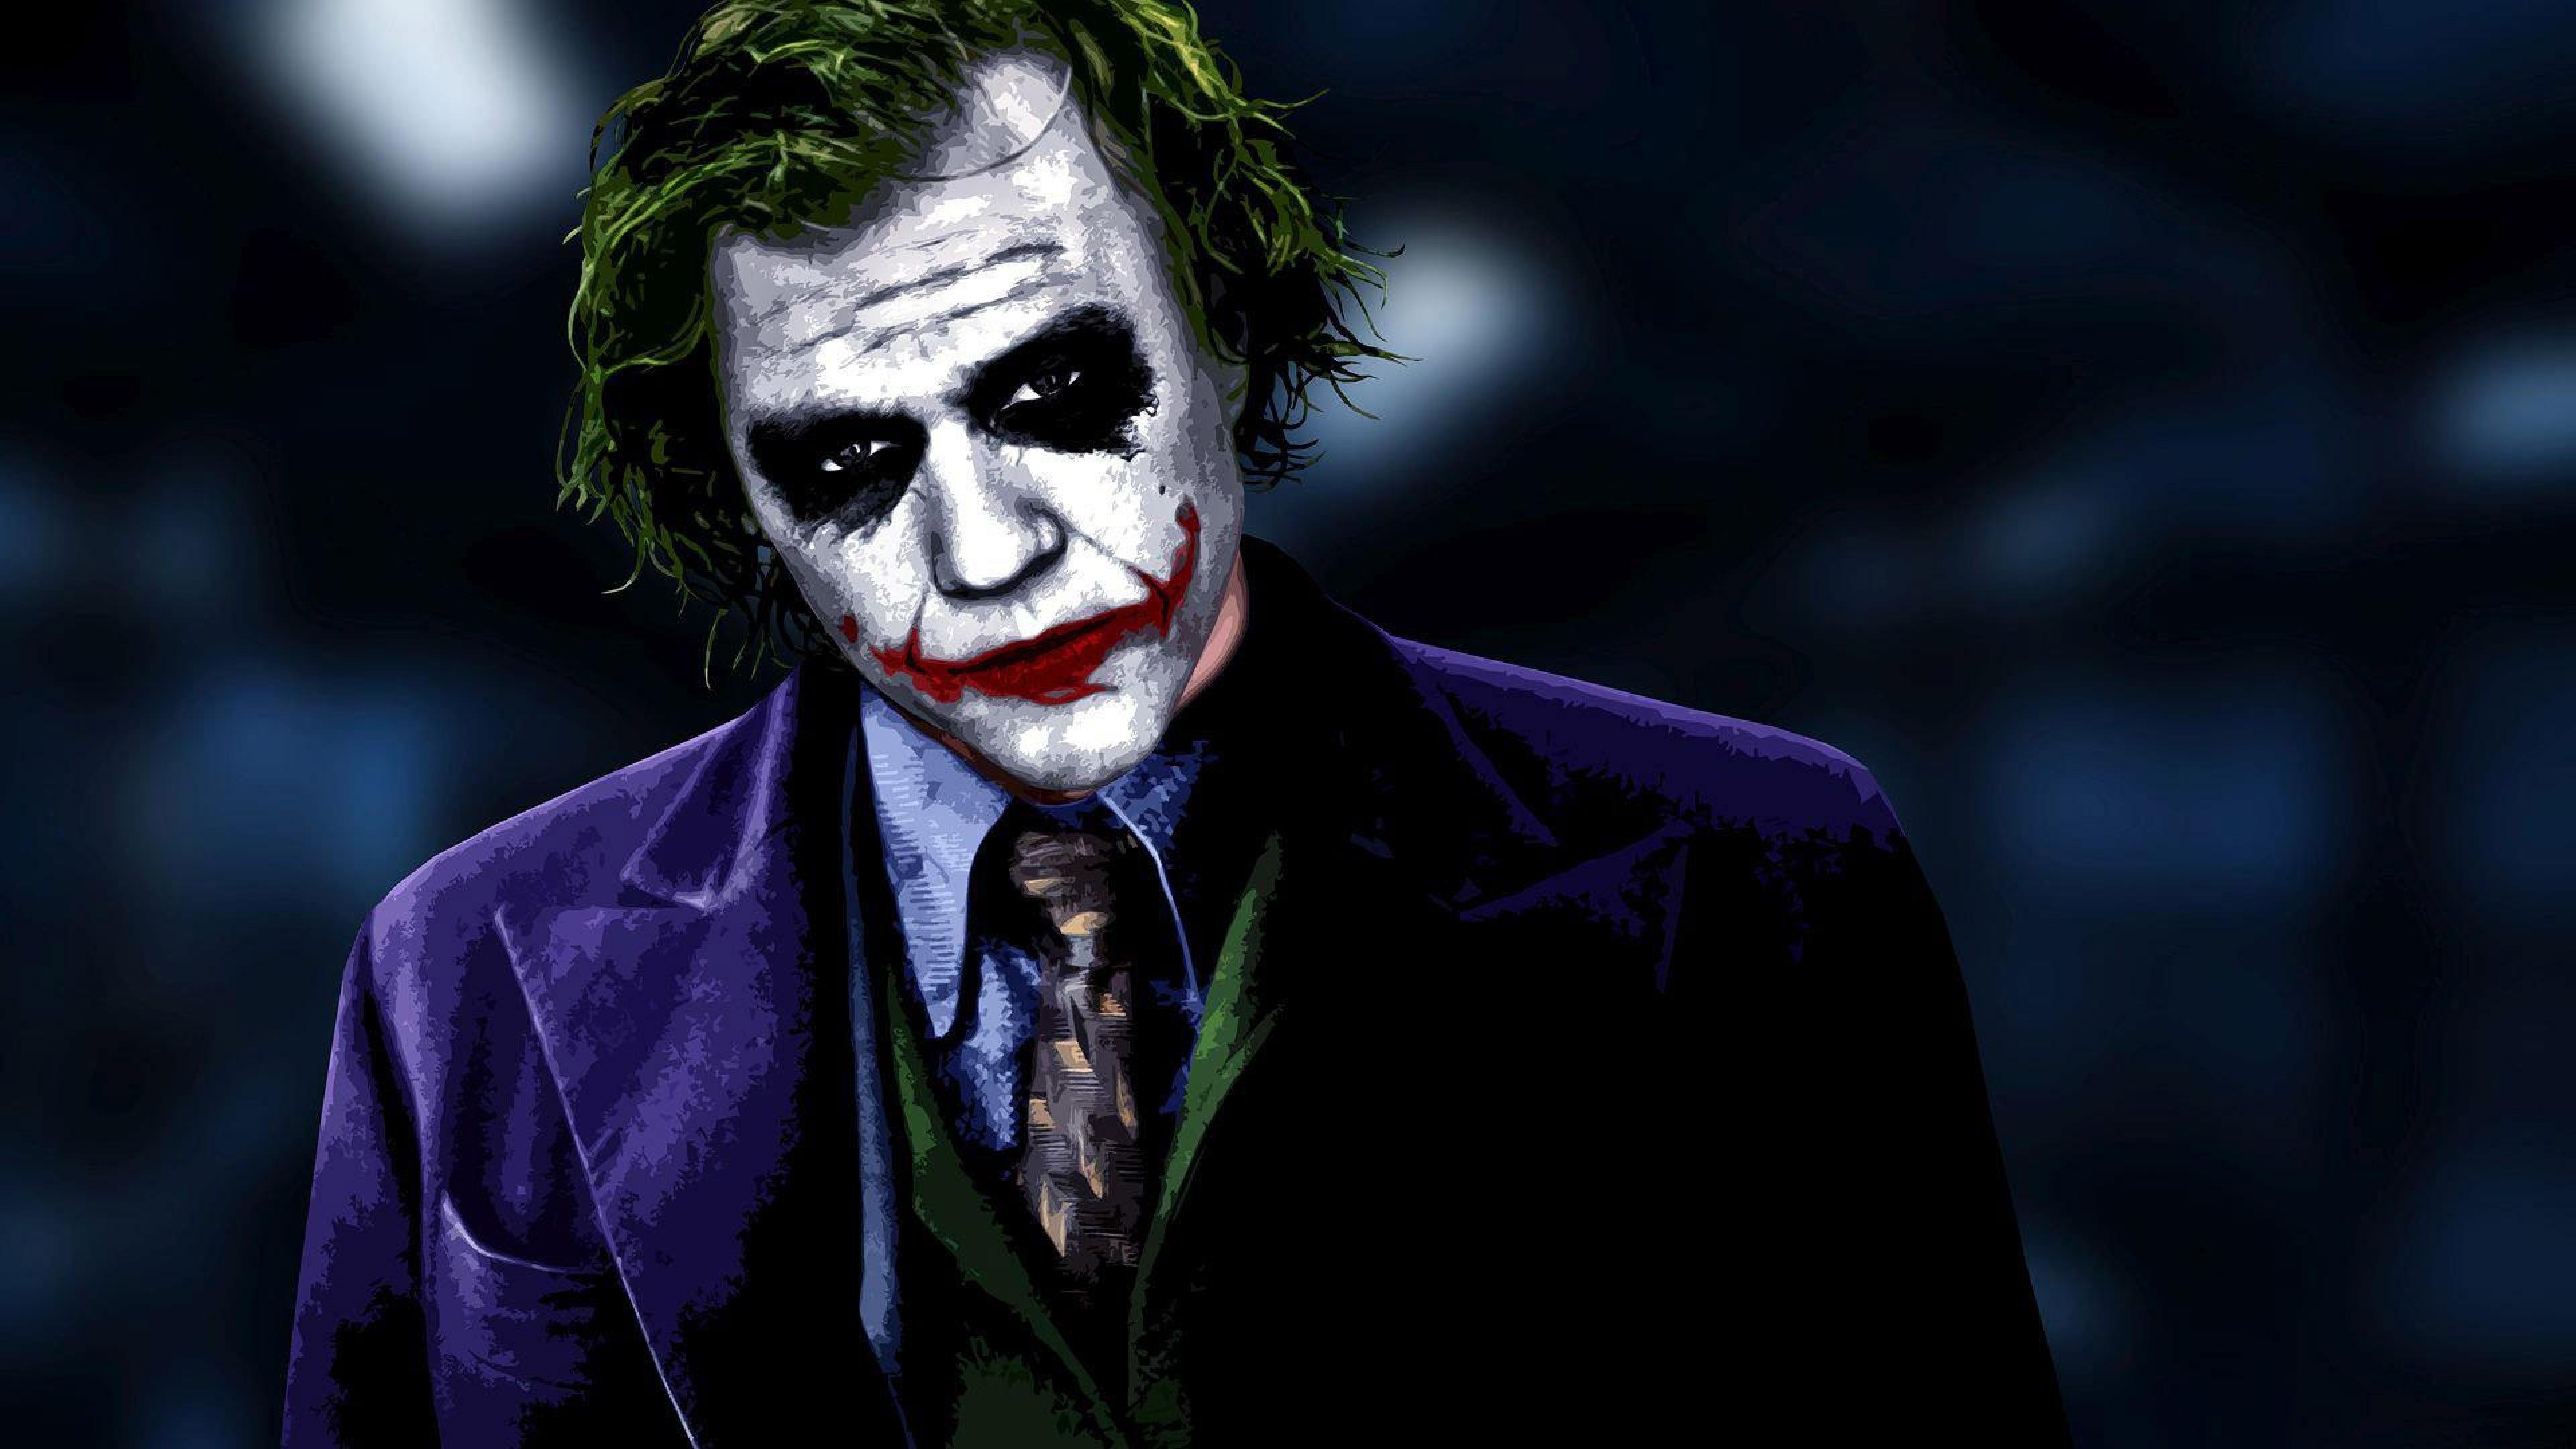 Joker 4K Ultra Wallpapers - Top Free Joker 4K Ultra Backgrounds ...